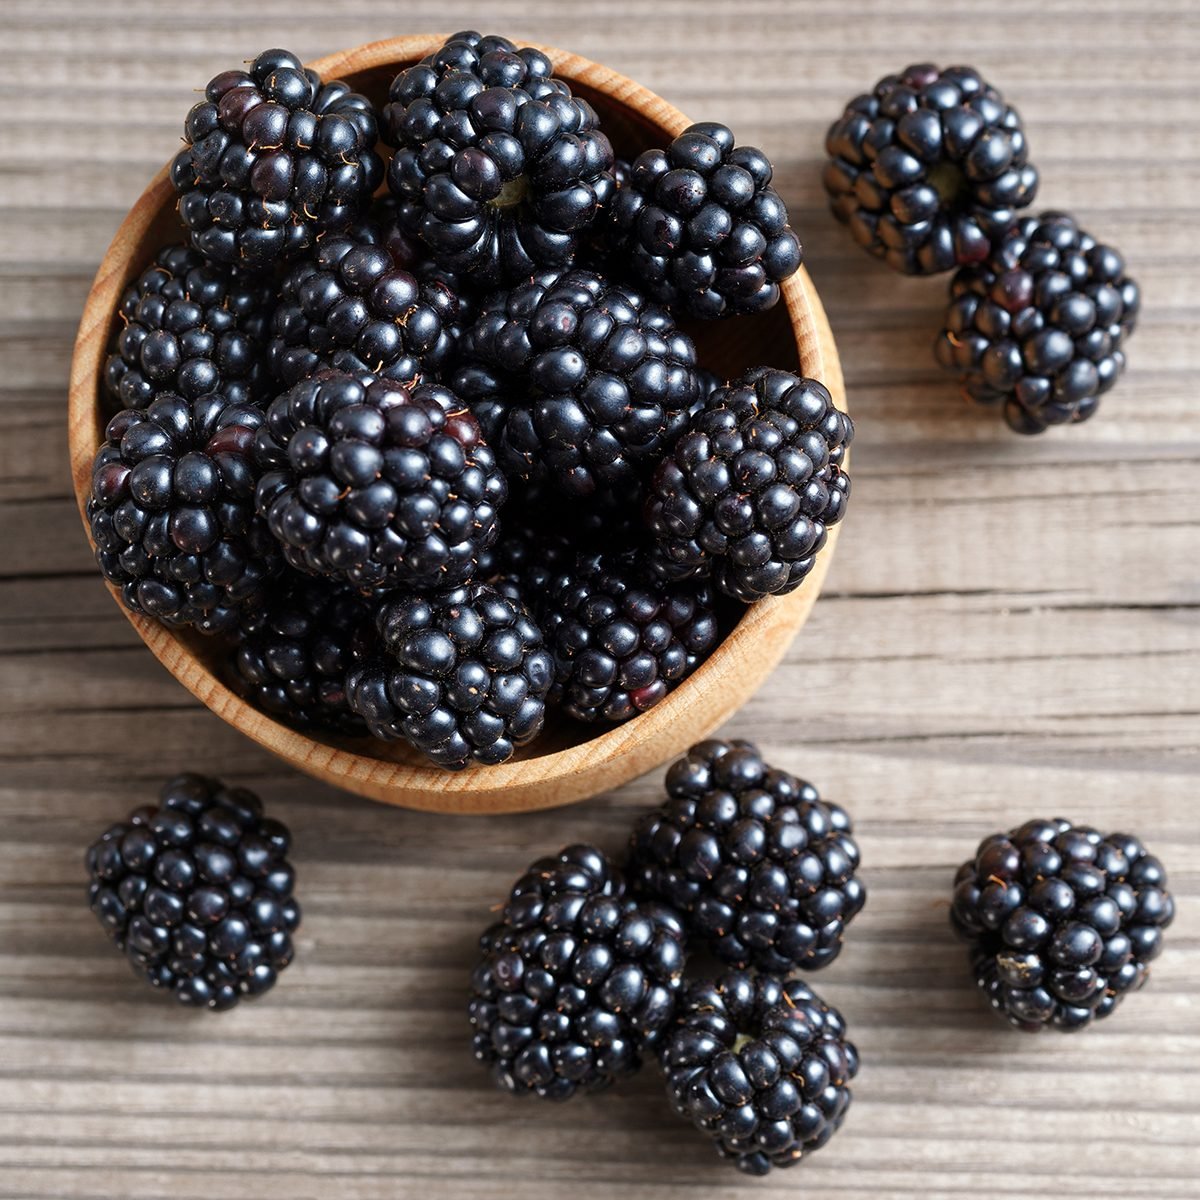 fruits for diabetics Deluxe blackberries in bowl on wooden background.